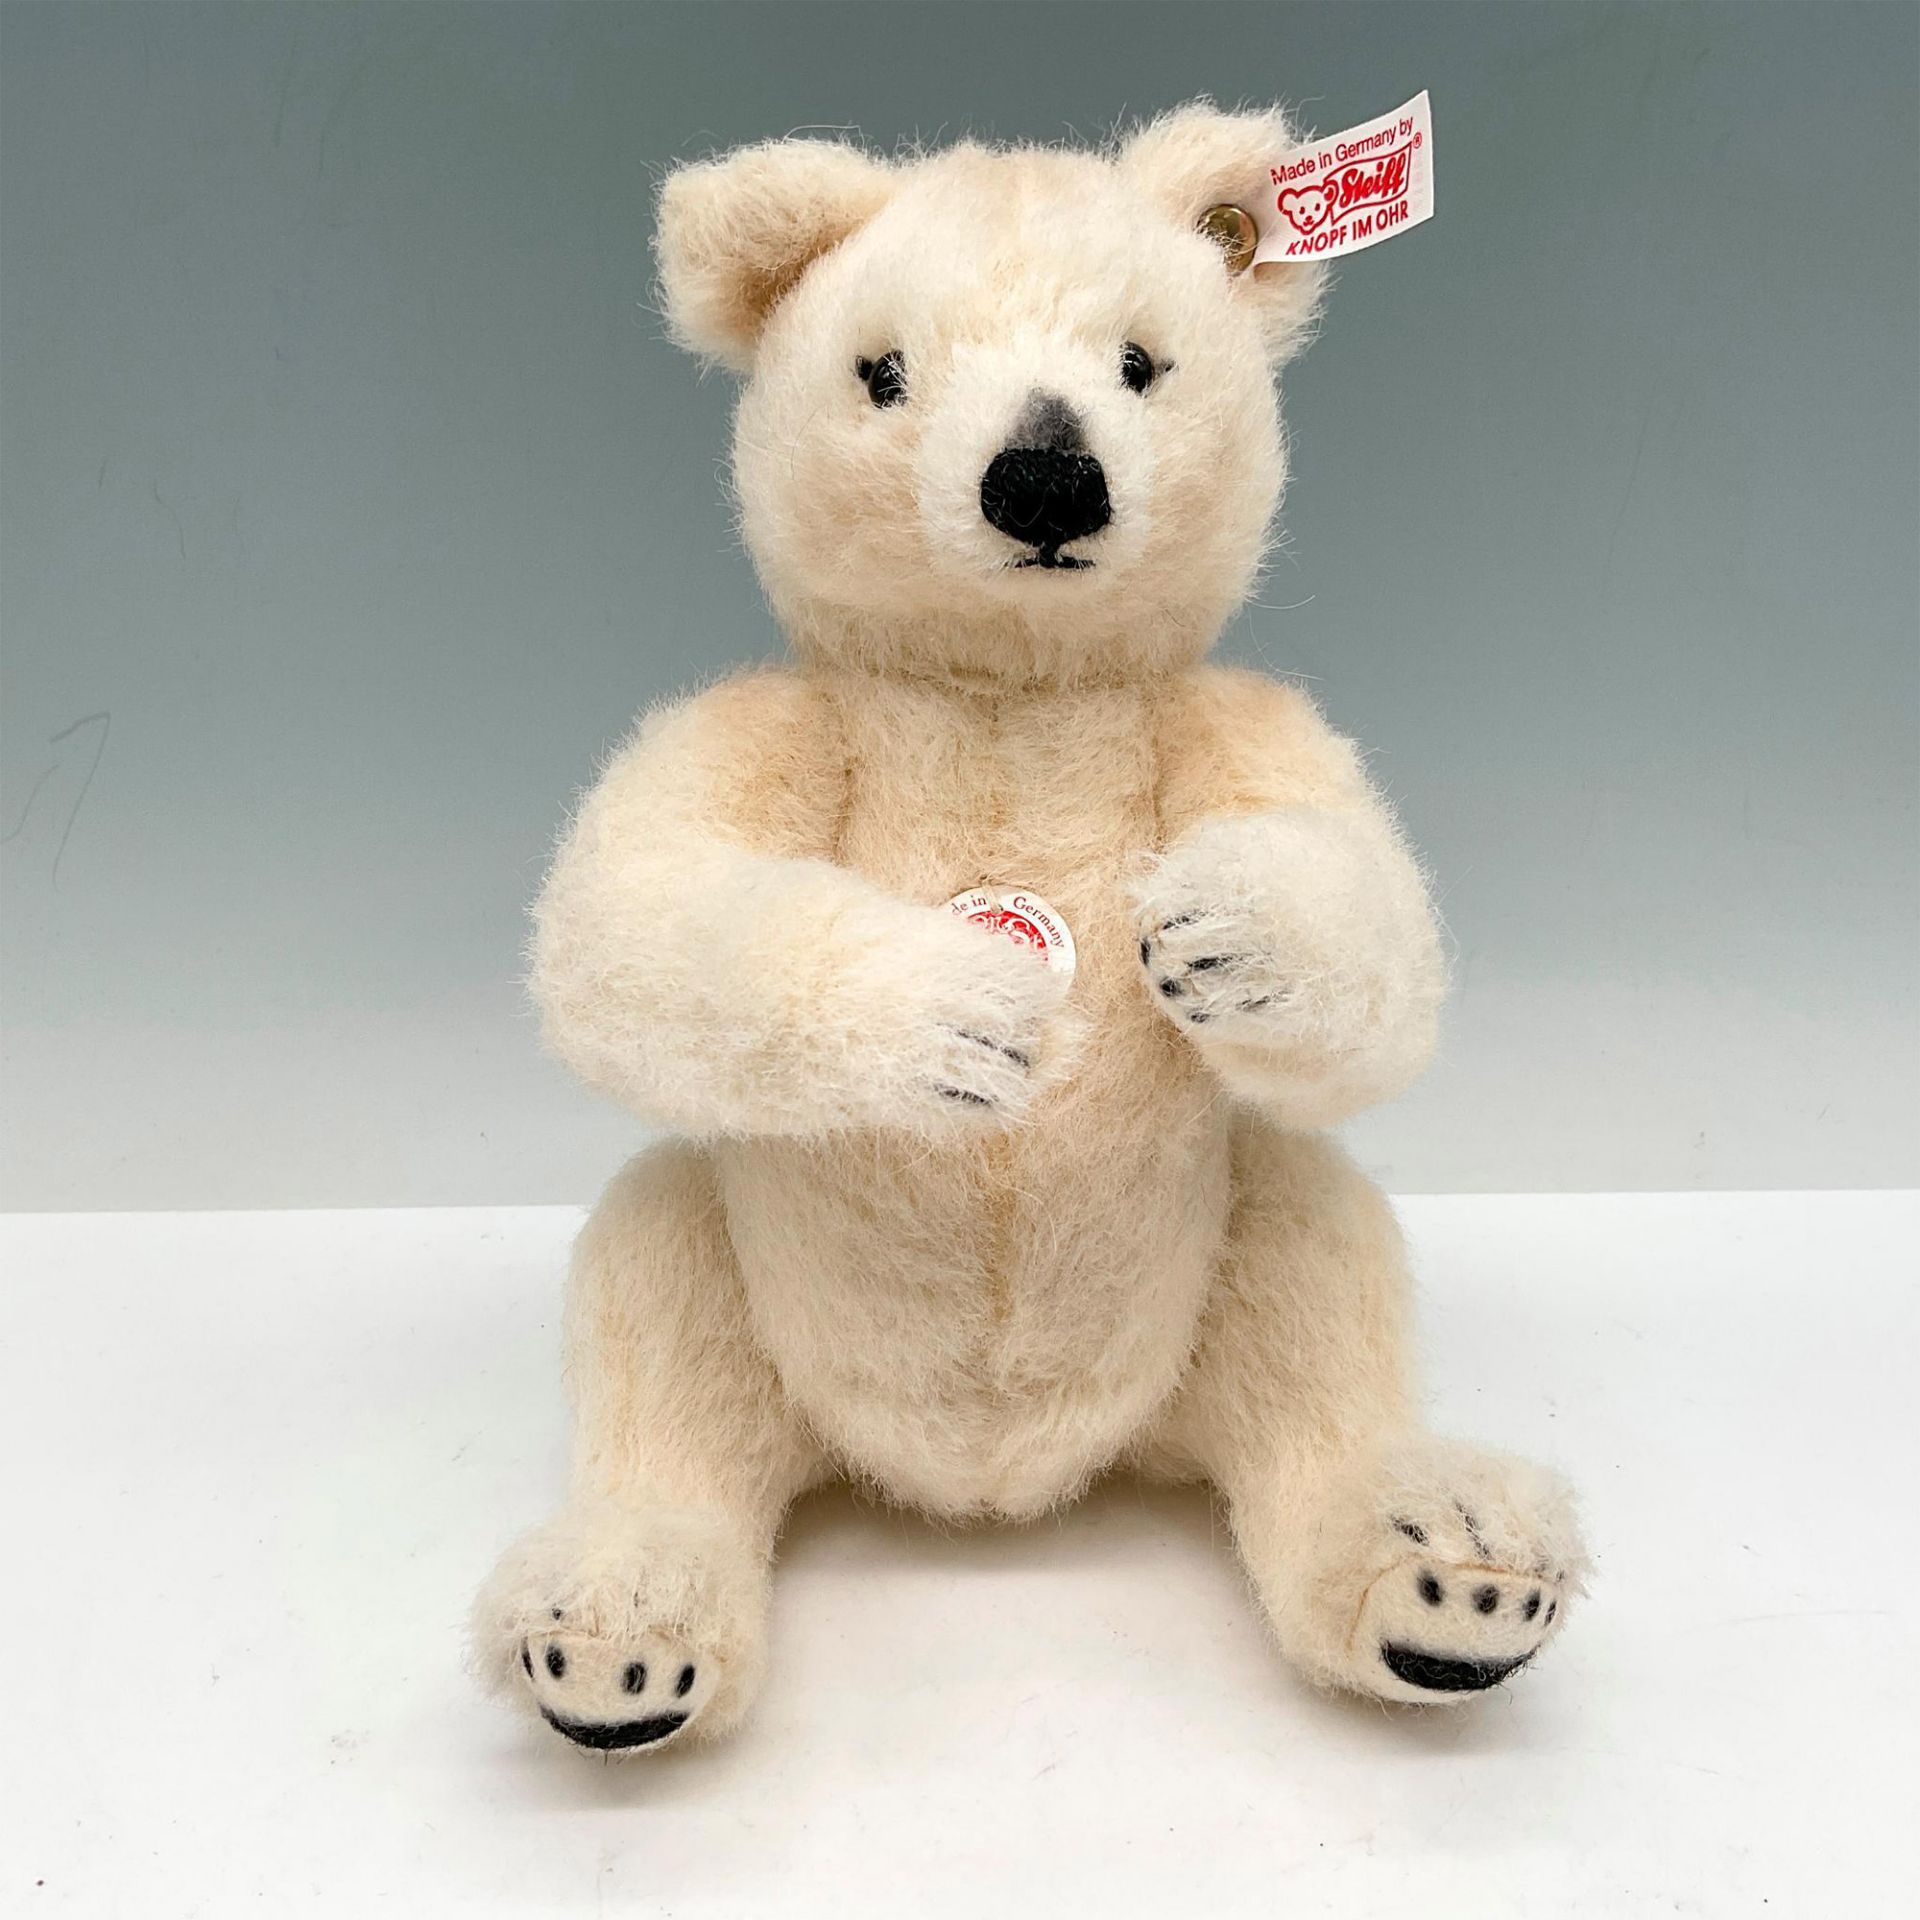 Steiff Limited Edition Plush Toy, Polar Bear